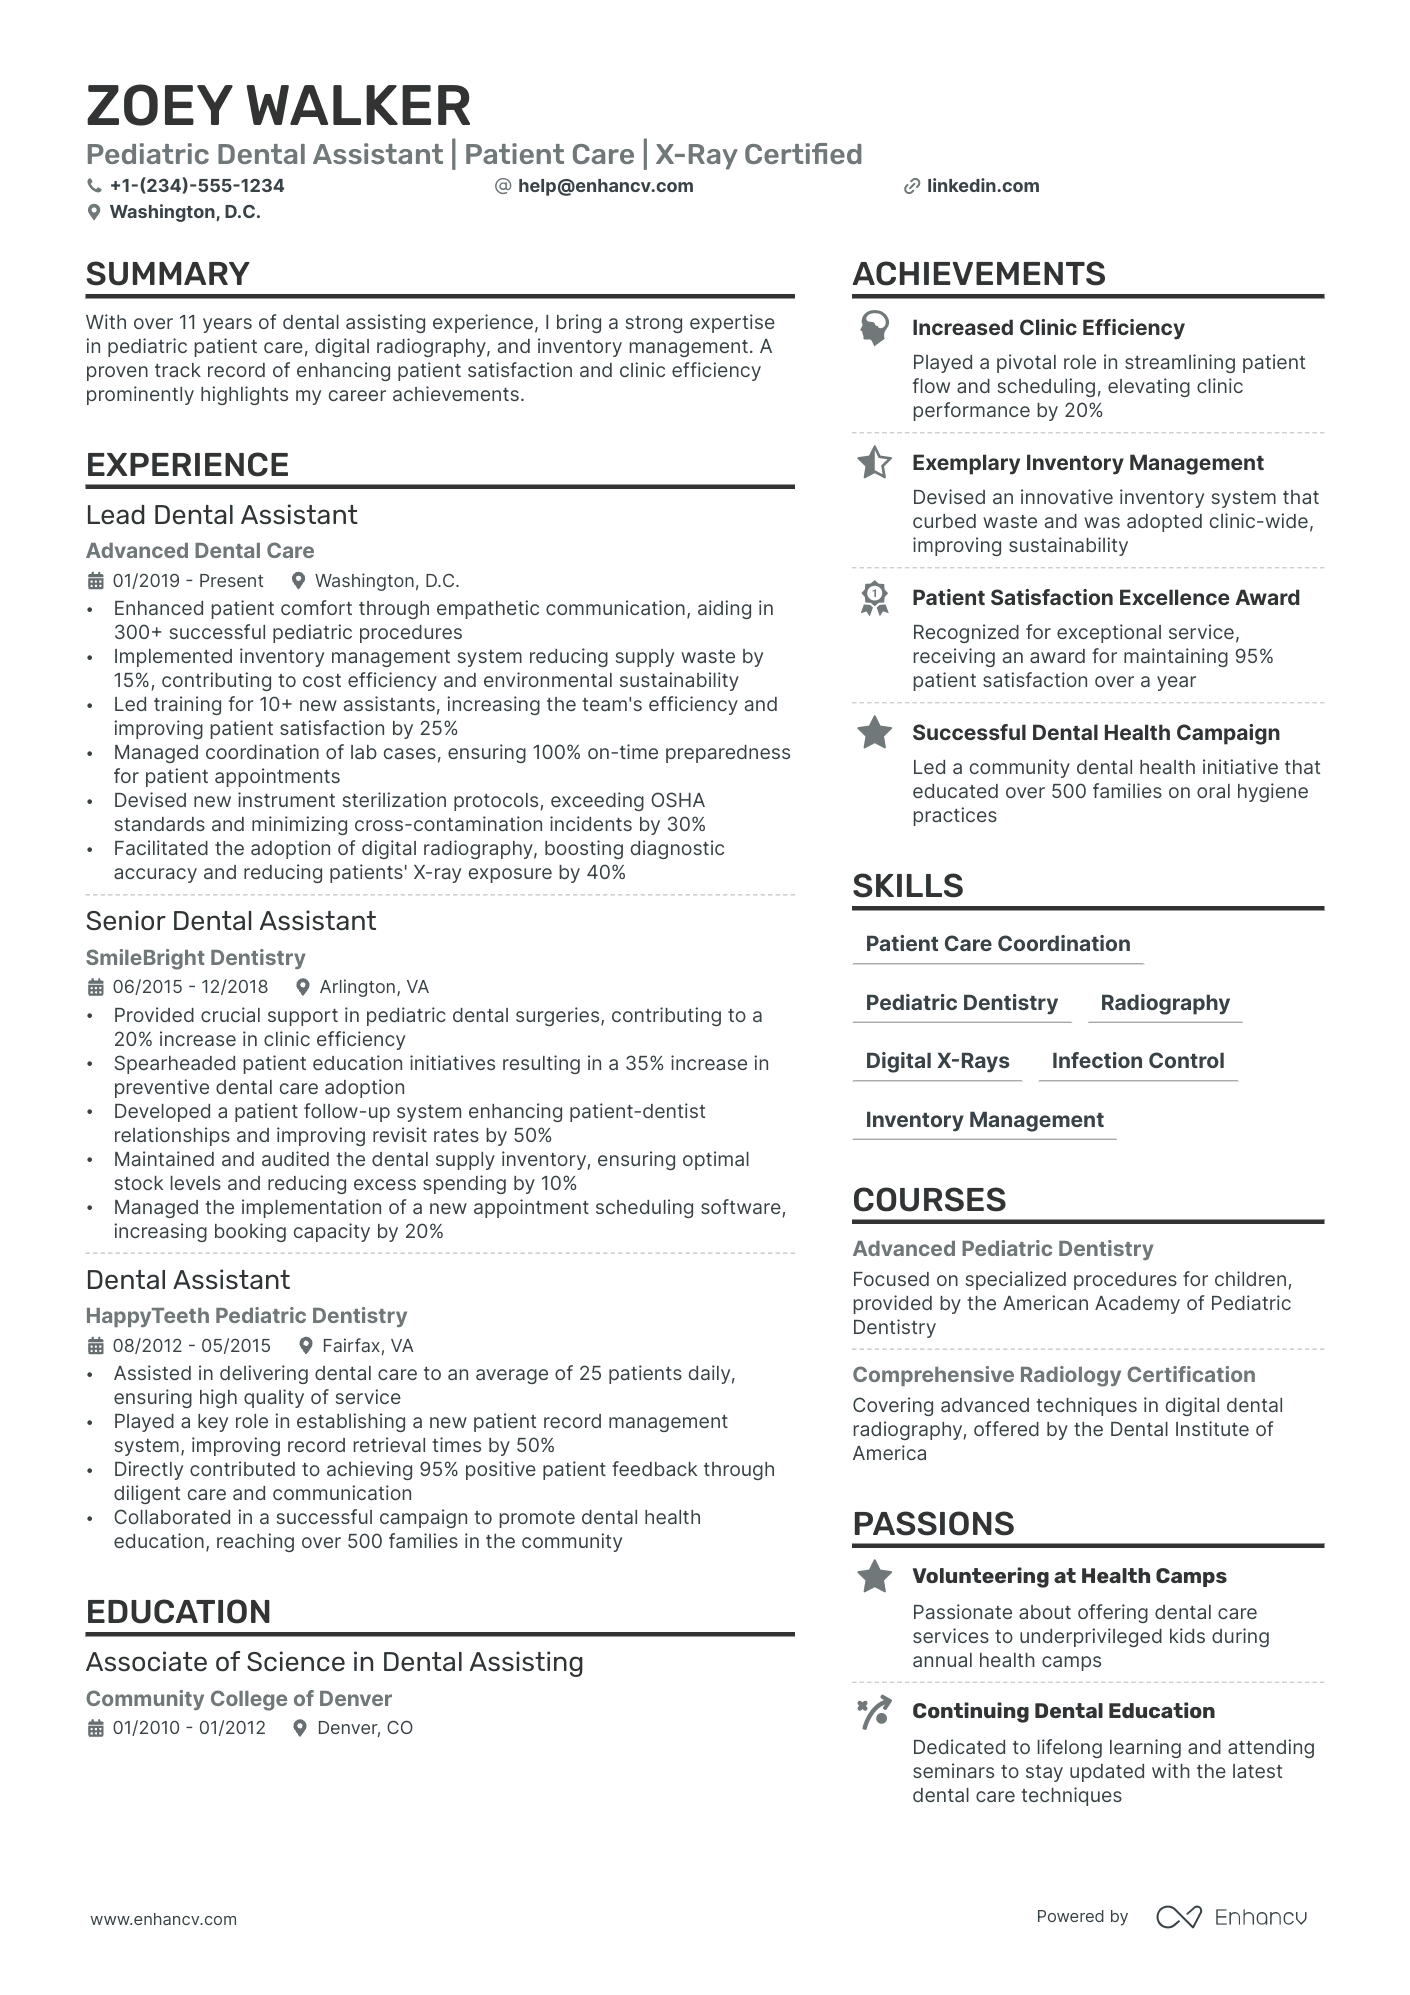 job description of a dental assistant for resume